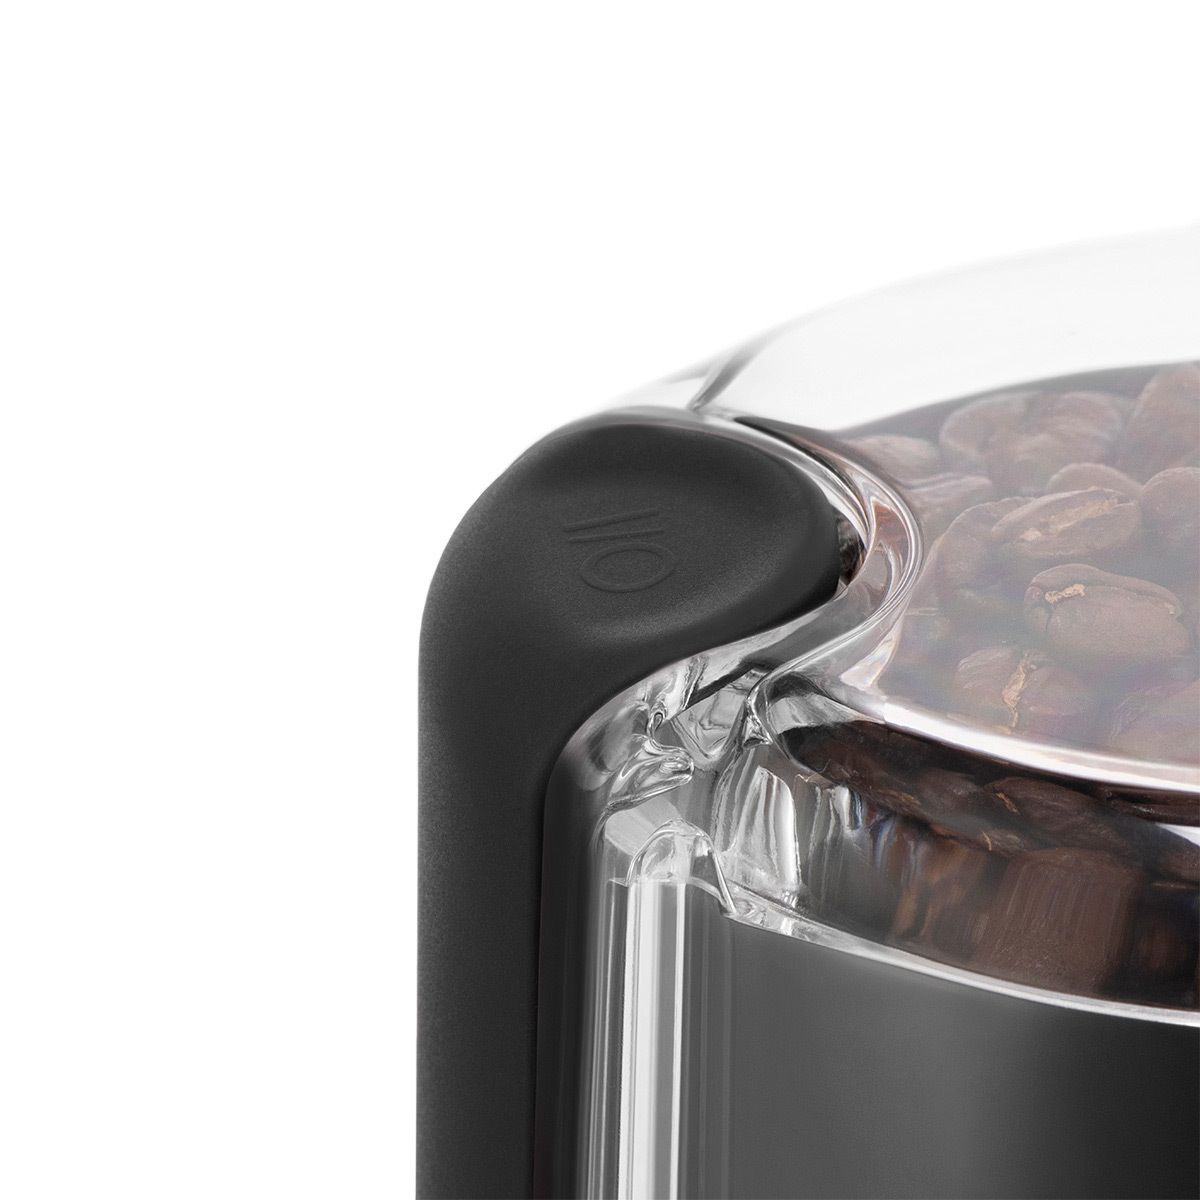 Bodum Bistro Electric Coffee Grinder, Chrome